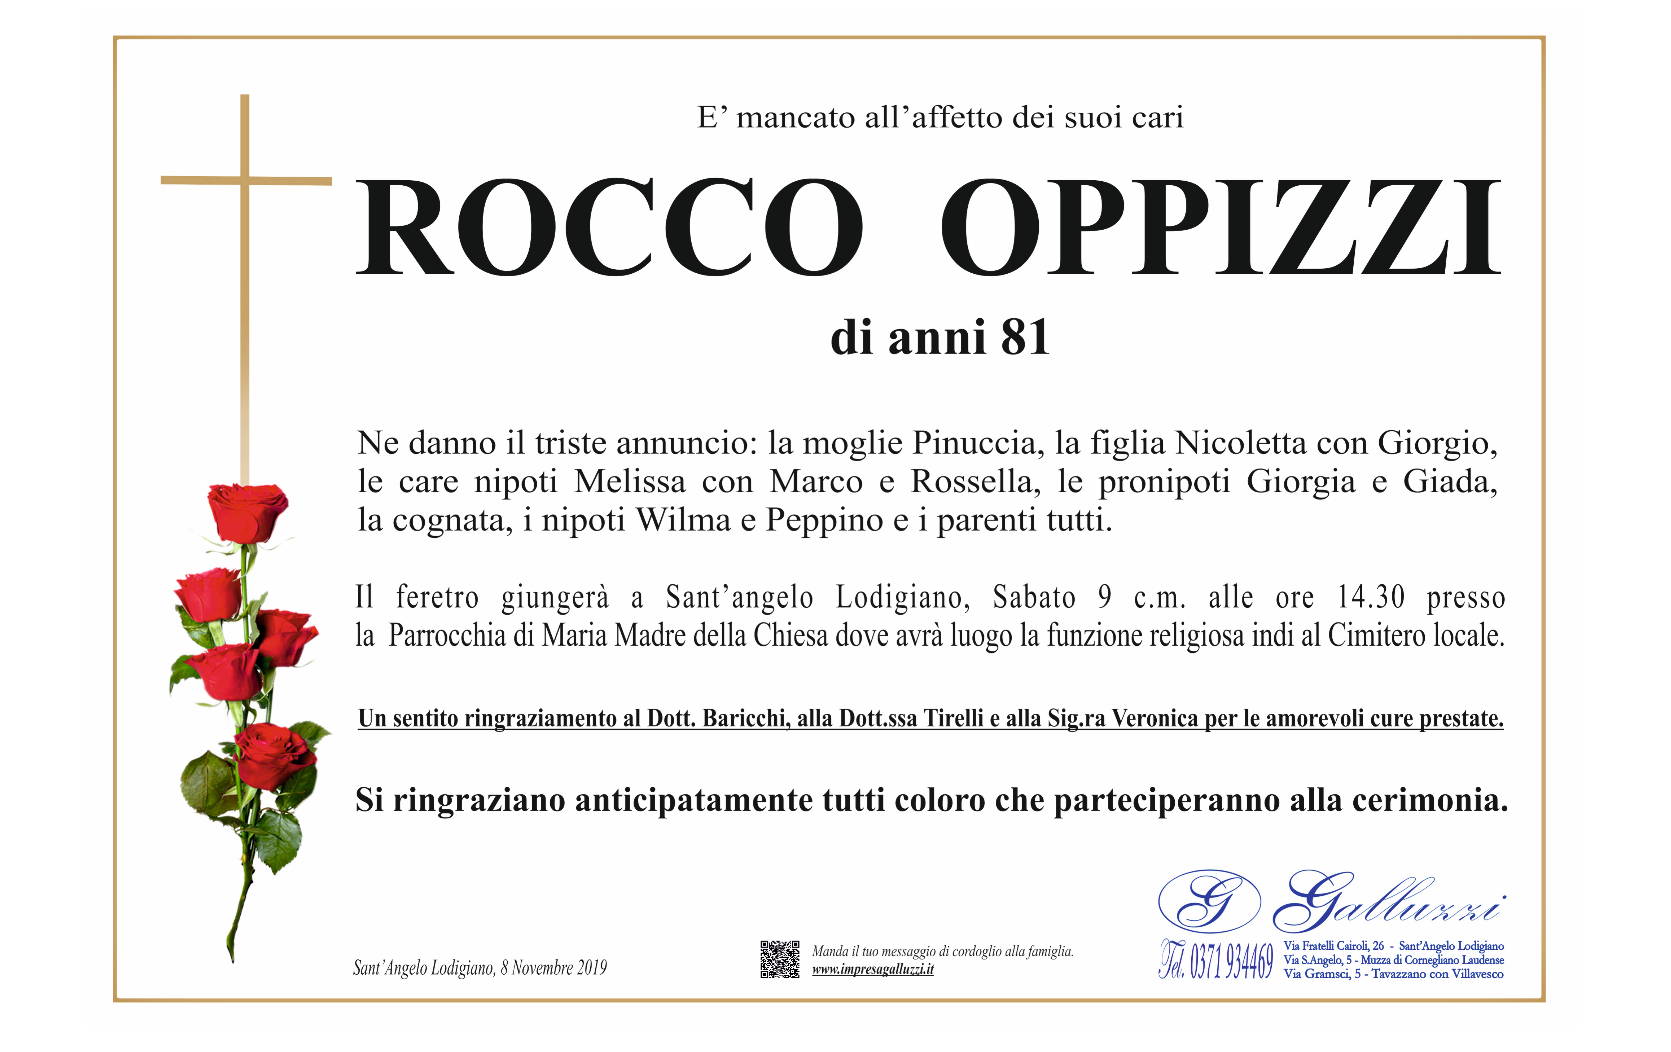 Rocco Oppizzi